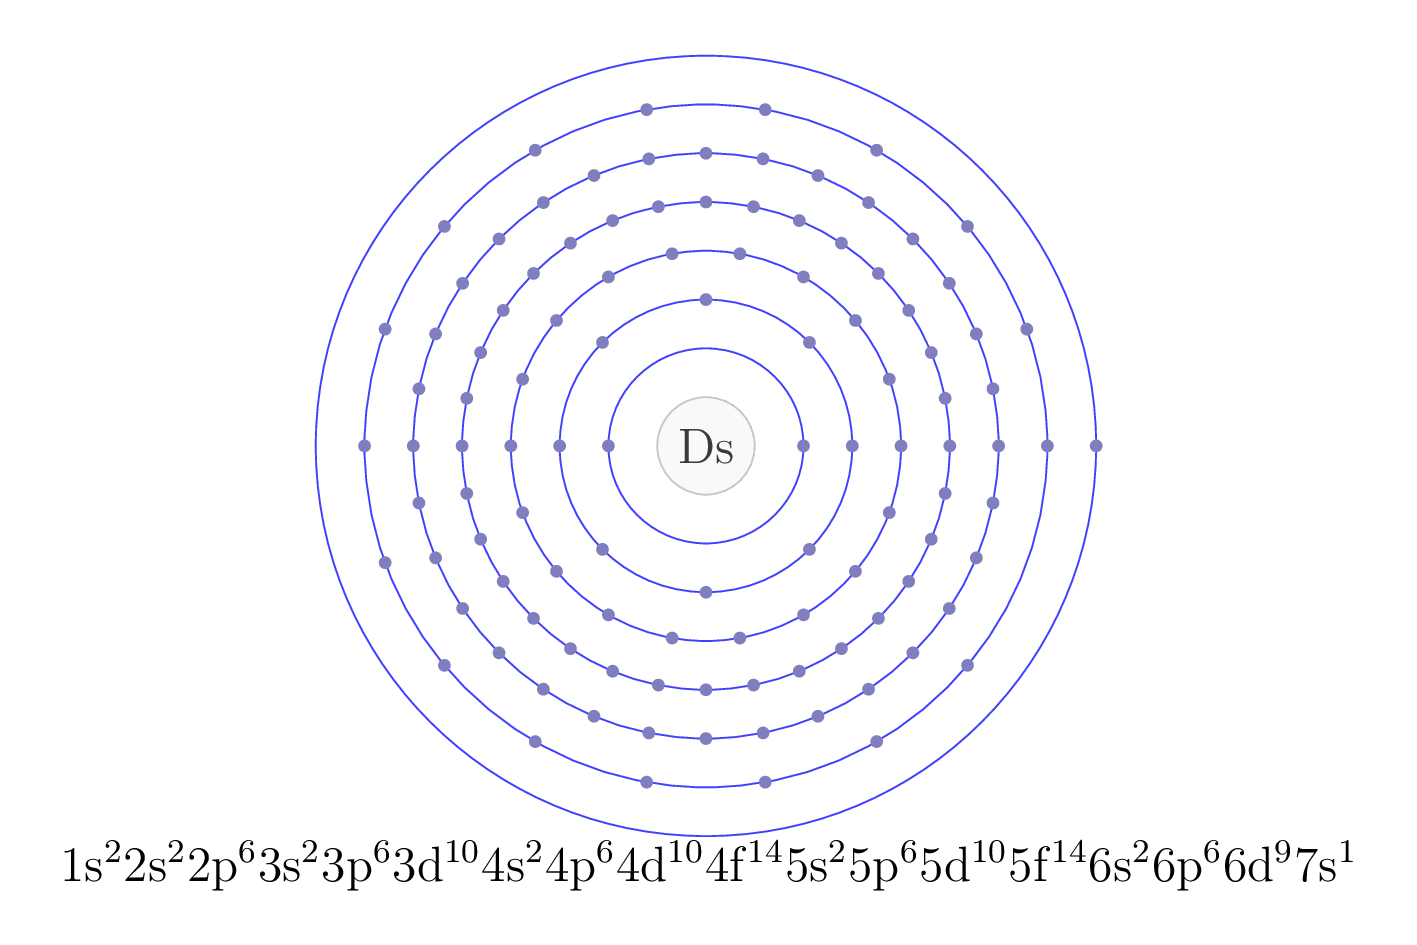 electron configuration of element Ds